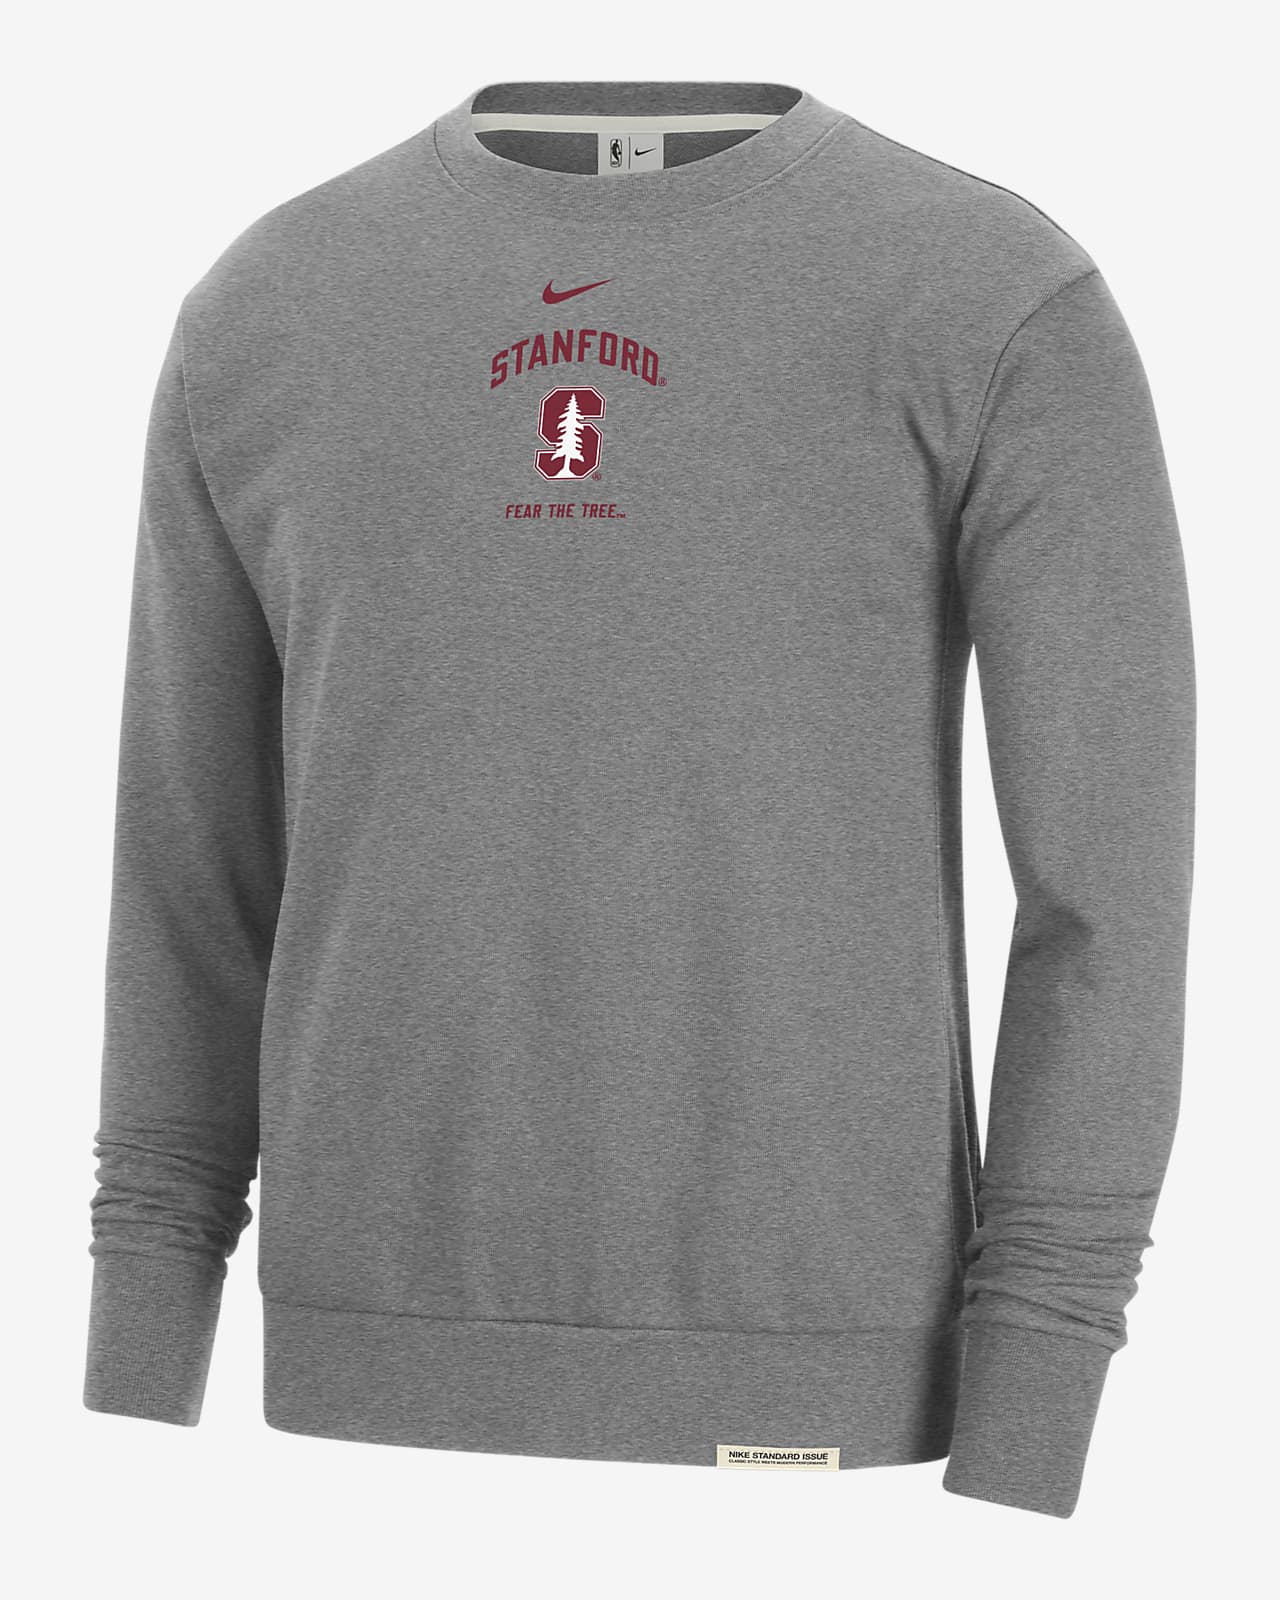 Stanford Standard Issue Men's Nike College Fleece Crew-Neck Sweatshirt